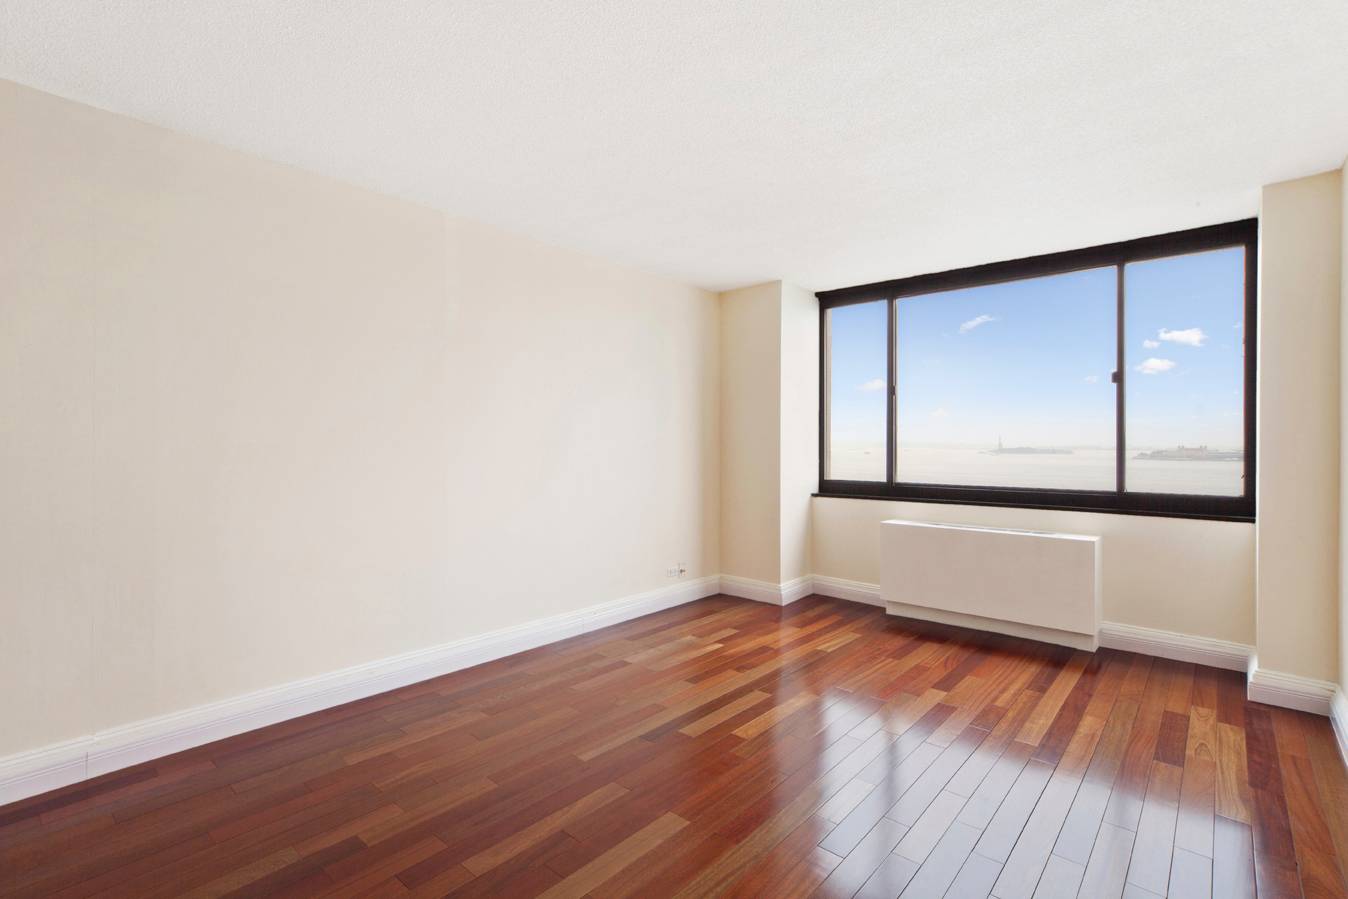 ** NO FEE ** Gorgeous Views of Hudson River, Private Balcony - Splendid 1 BR apartment in Full Service Condominium